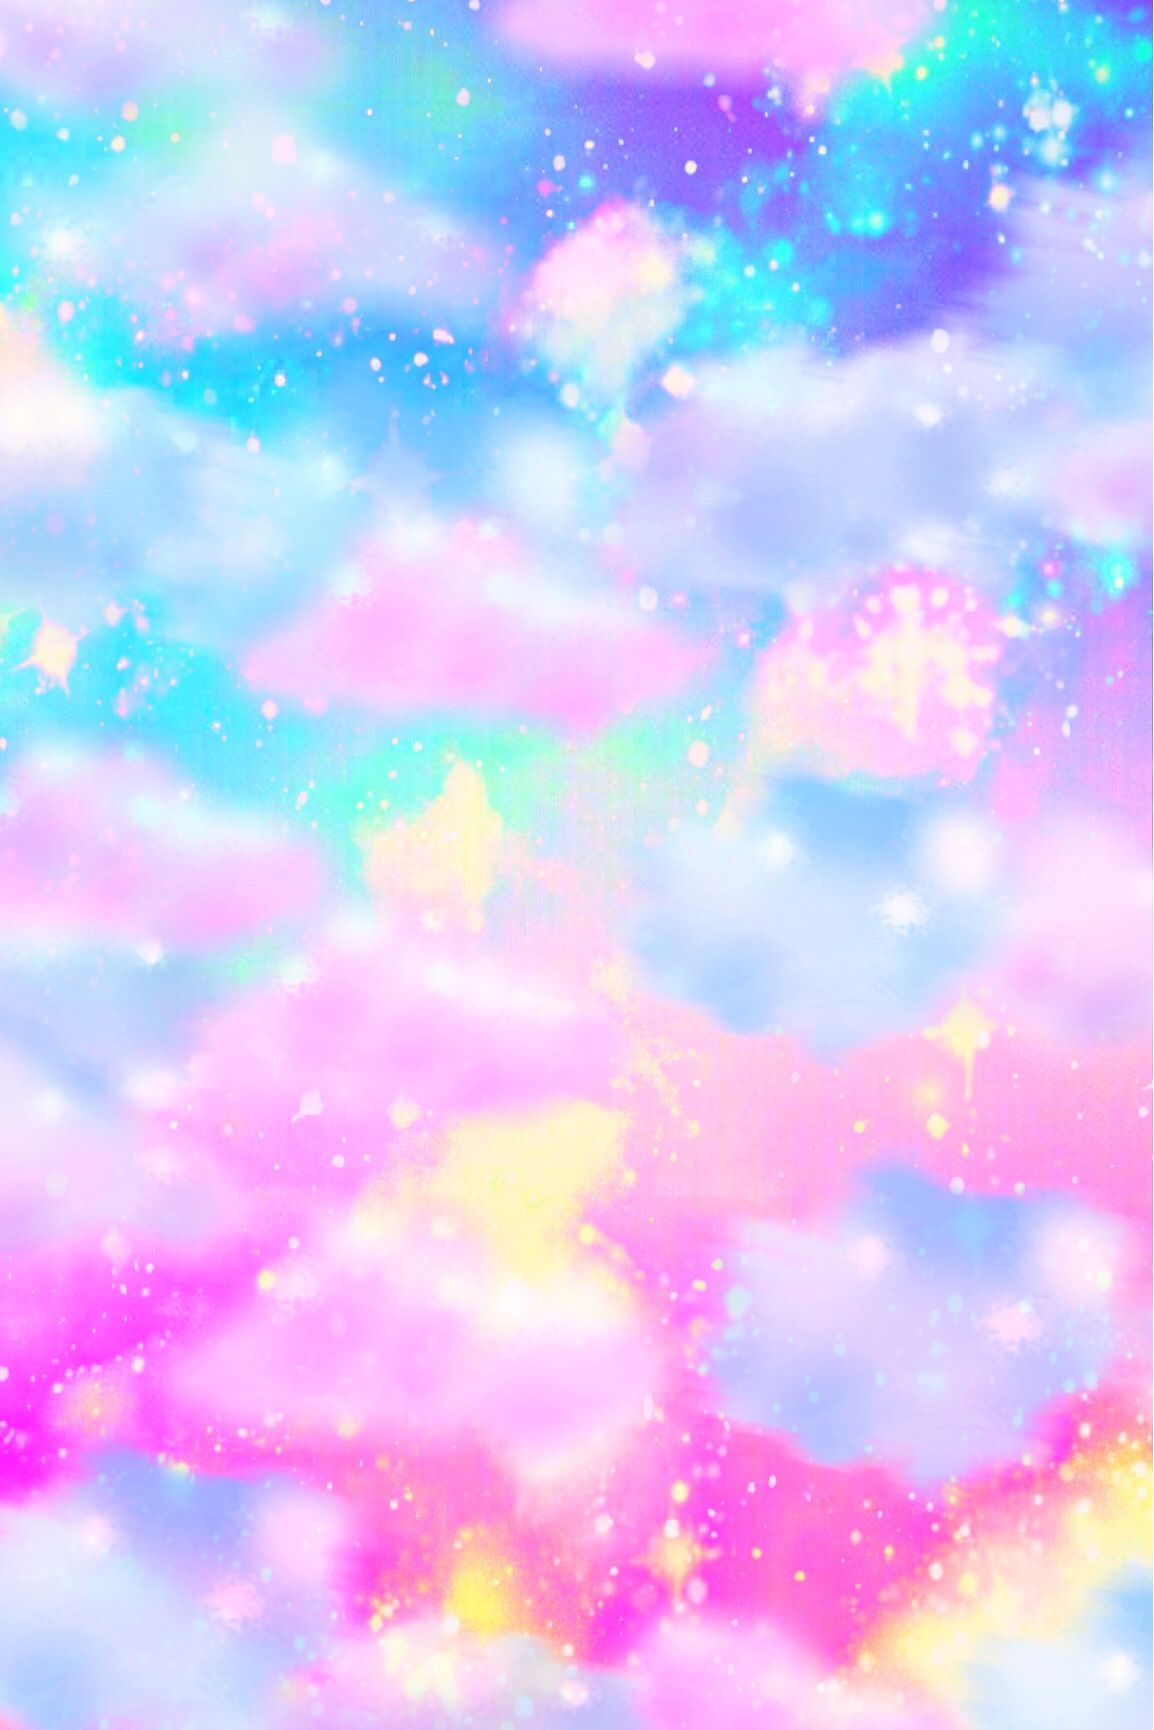 Cotton Candy Clouds Galaxy Wallpaper. Unicorn wallpaper cute, Galaxy wallpaper, Pastel galaxy